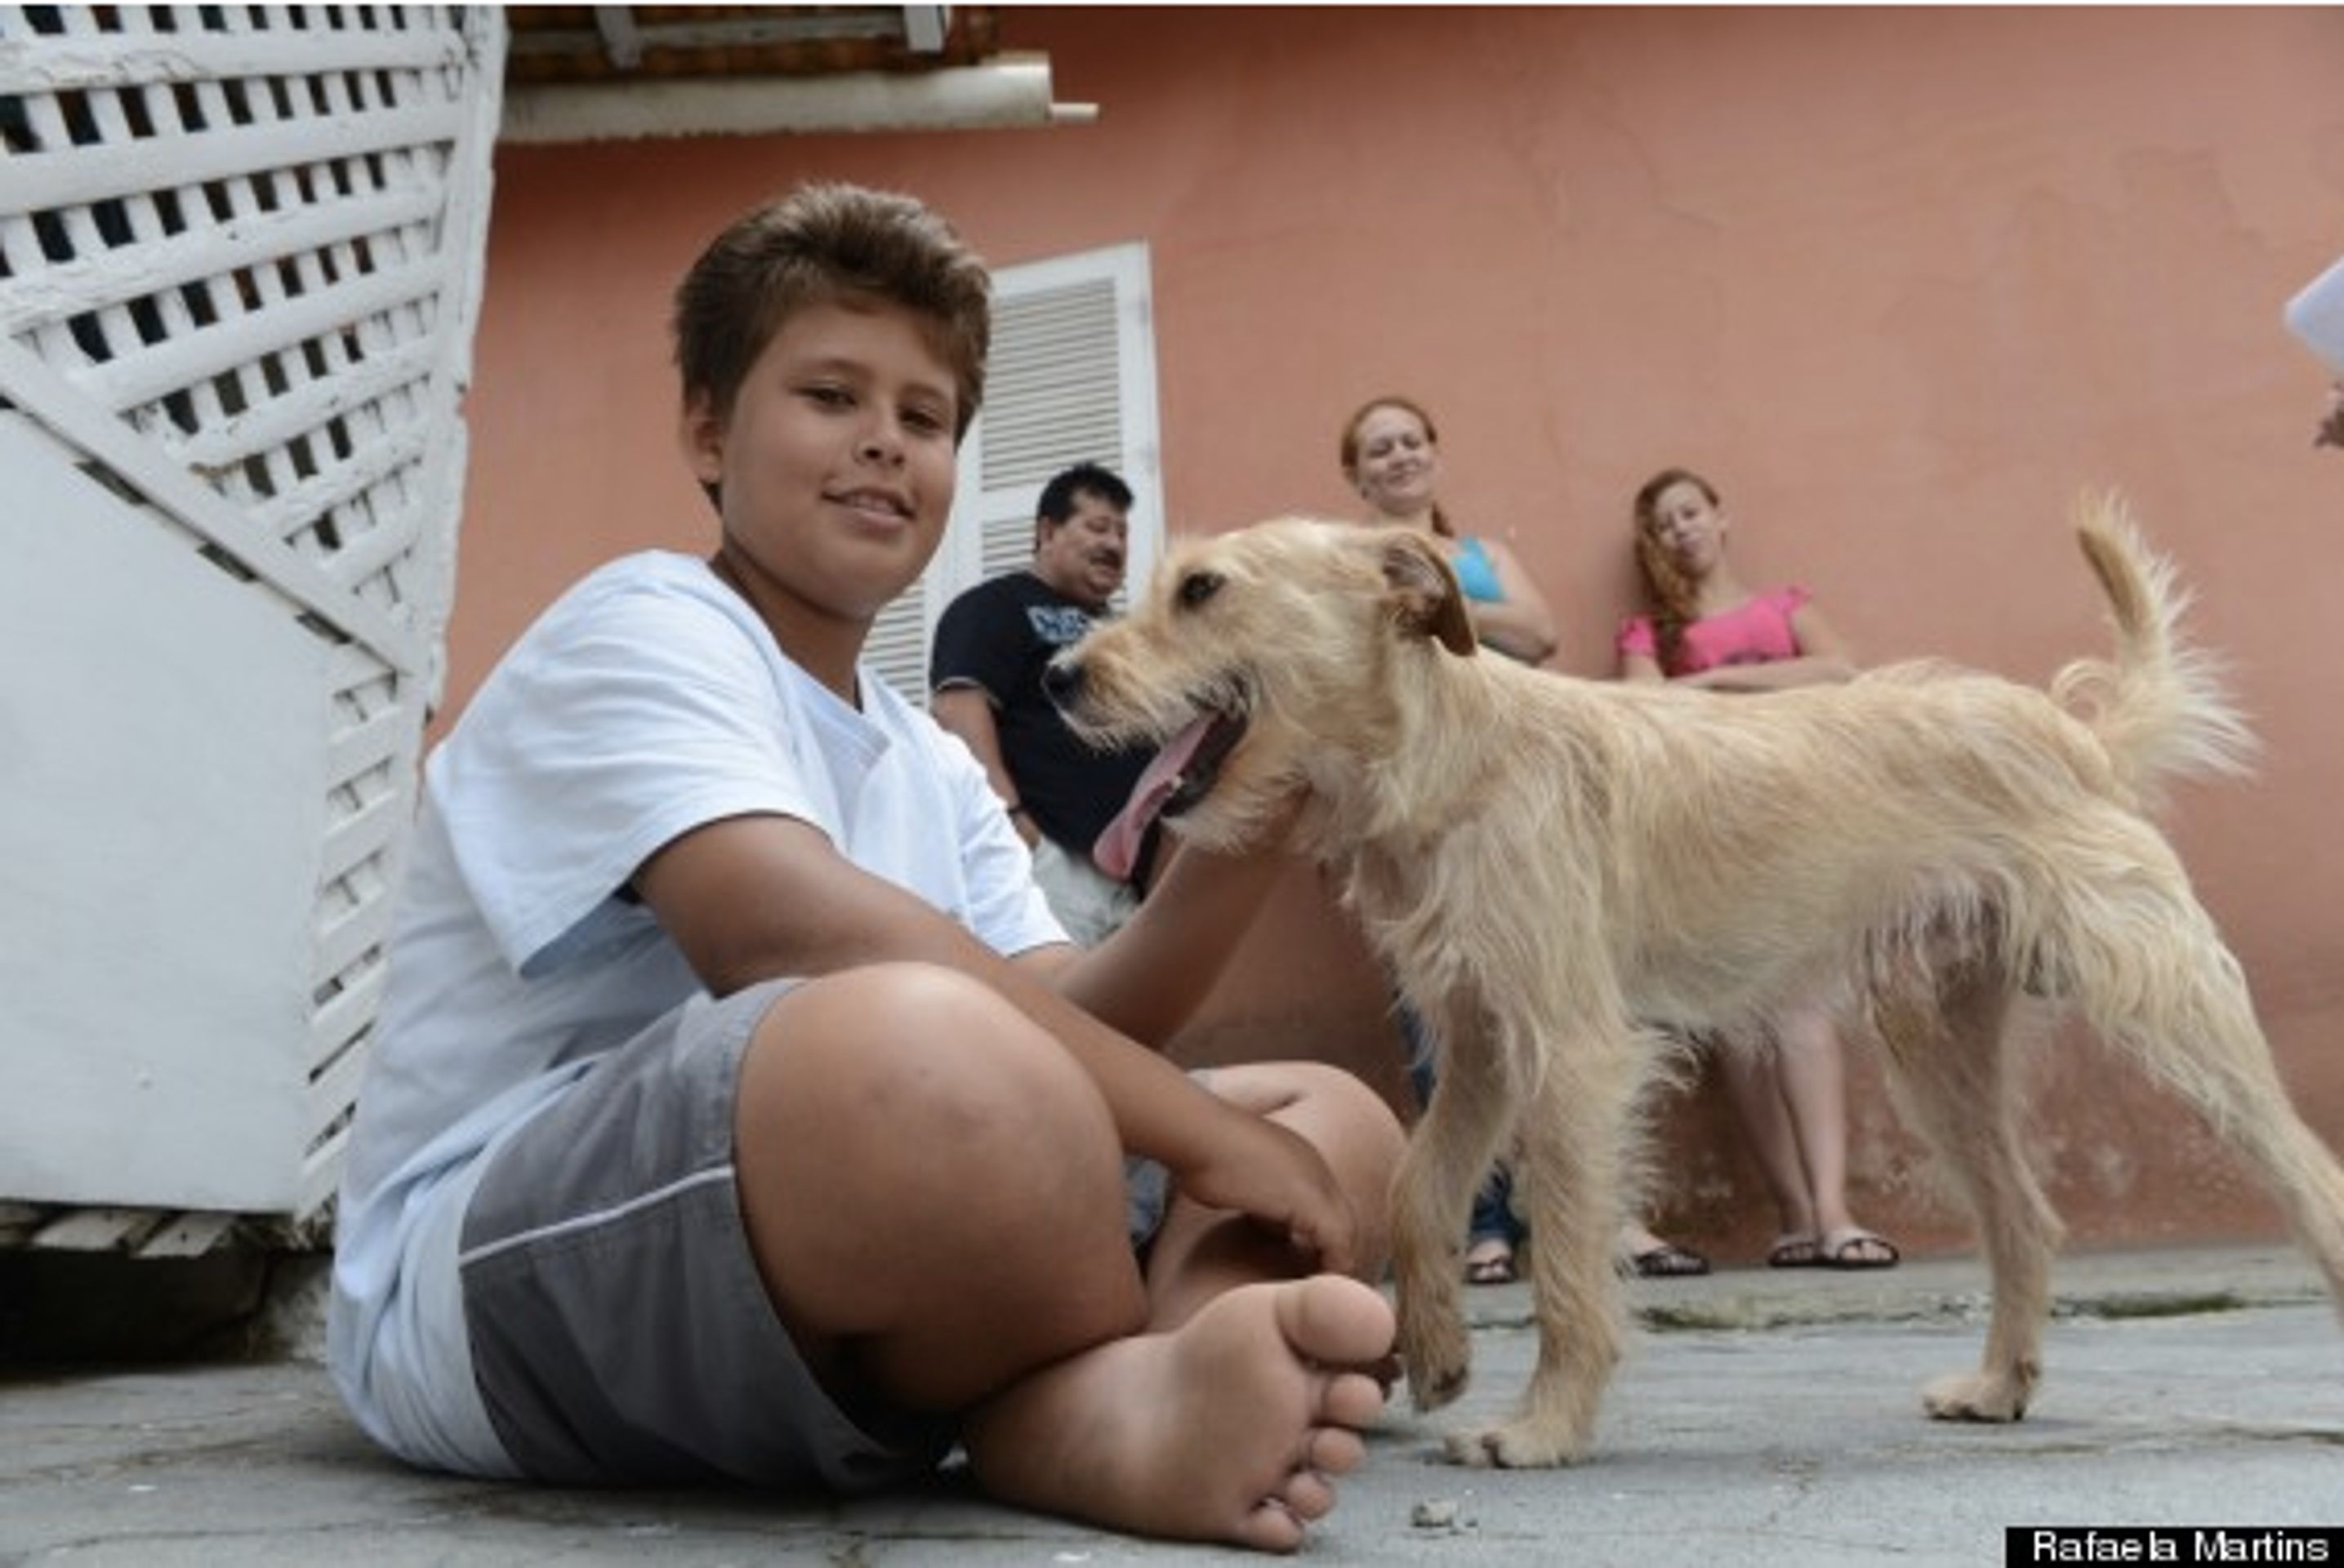 Chlapec zachránil zraněného pejska ze silnice - GALERIE: Chlapec zachránil zraněného psa ze silnice (3/3)